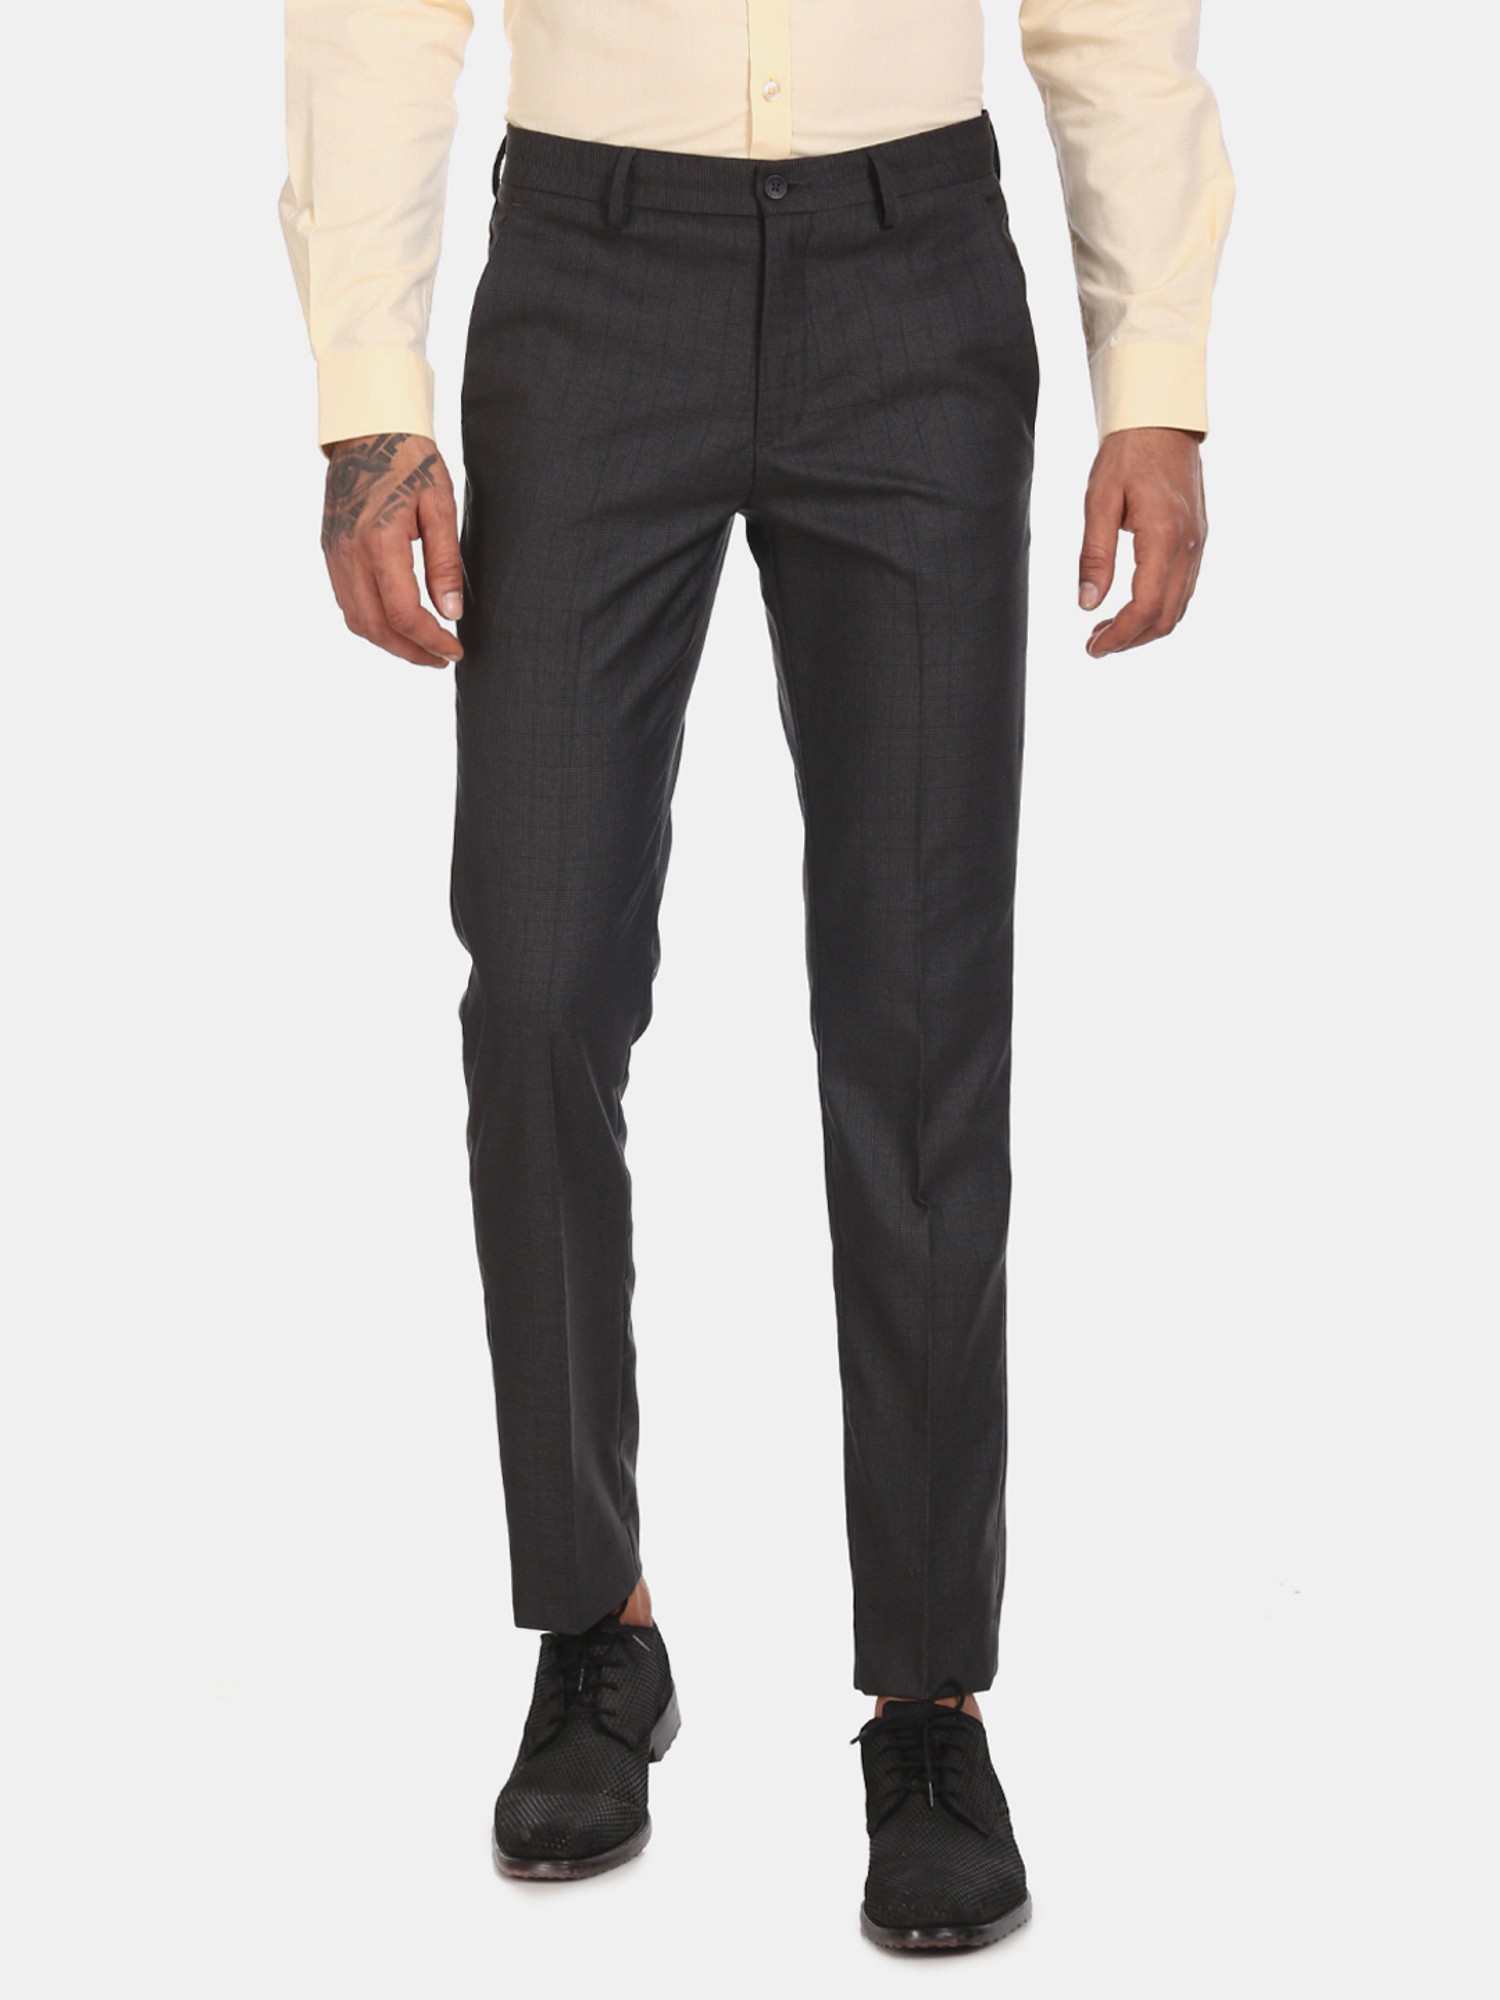 Buy Black Trousers & Pants for Men by EXCALIBUR Online | Ajio.com